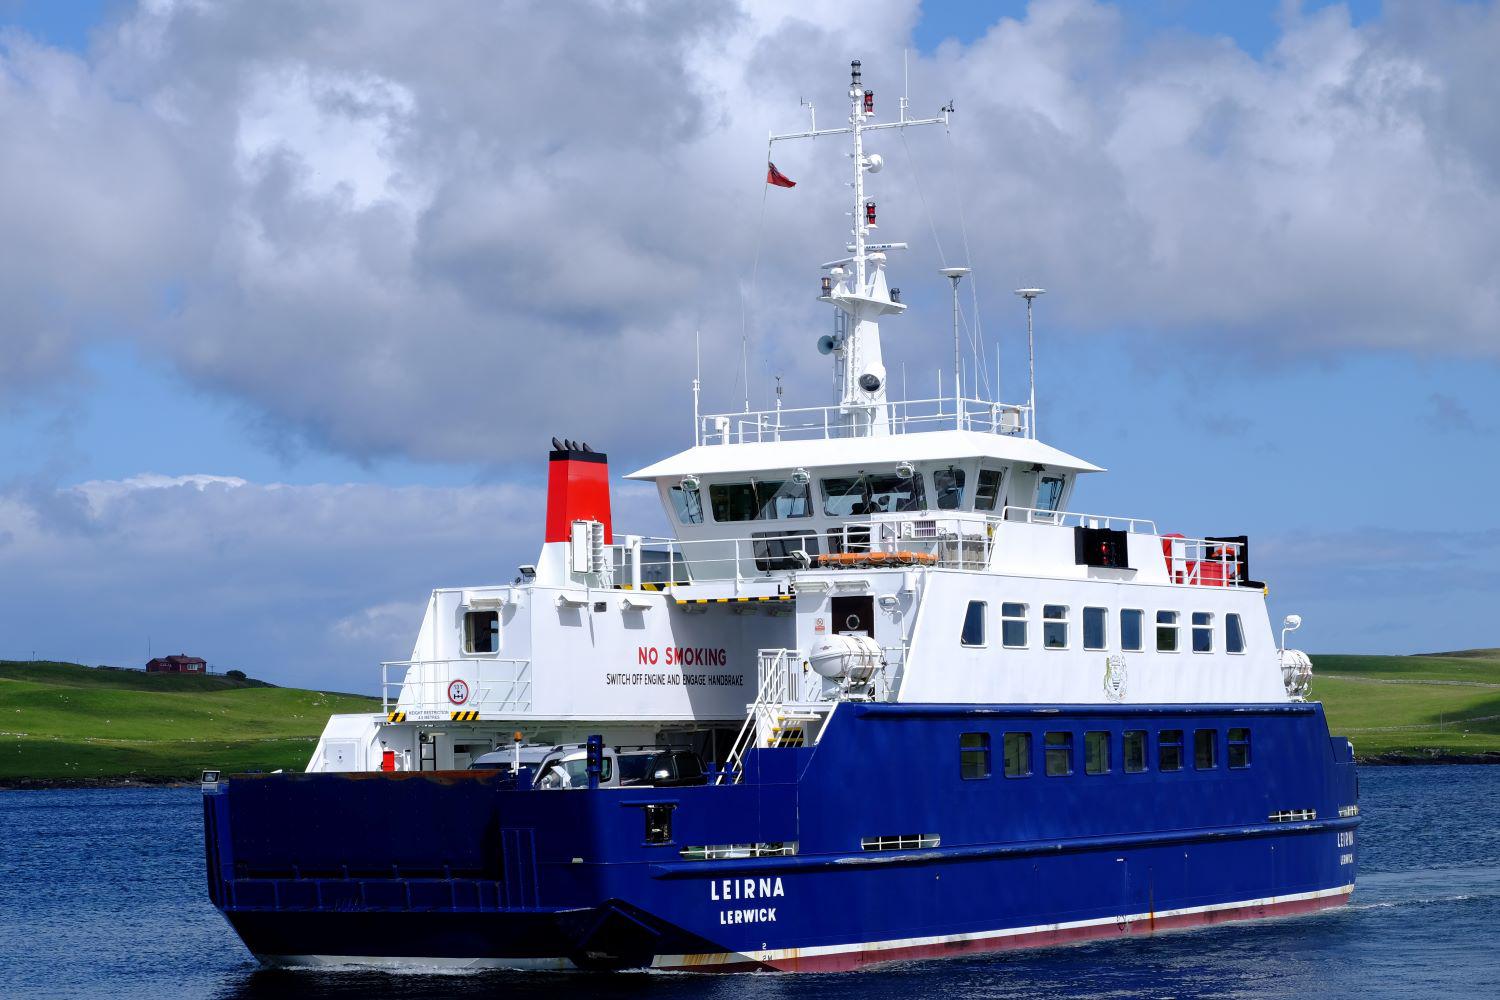 Bressay ferry - MV Leirna